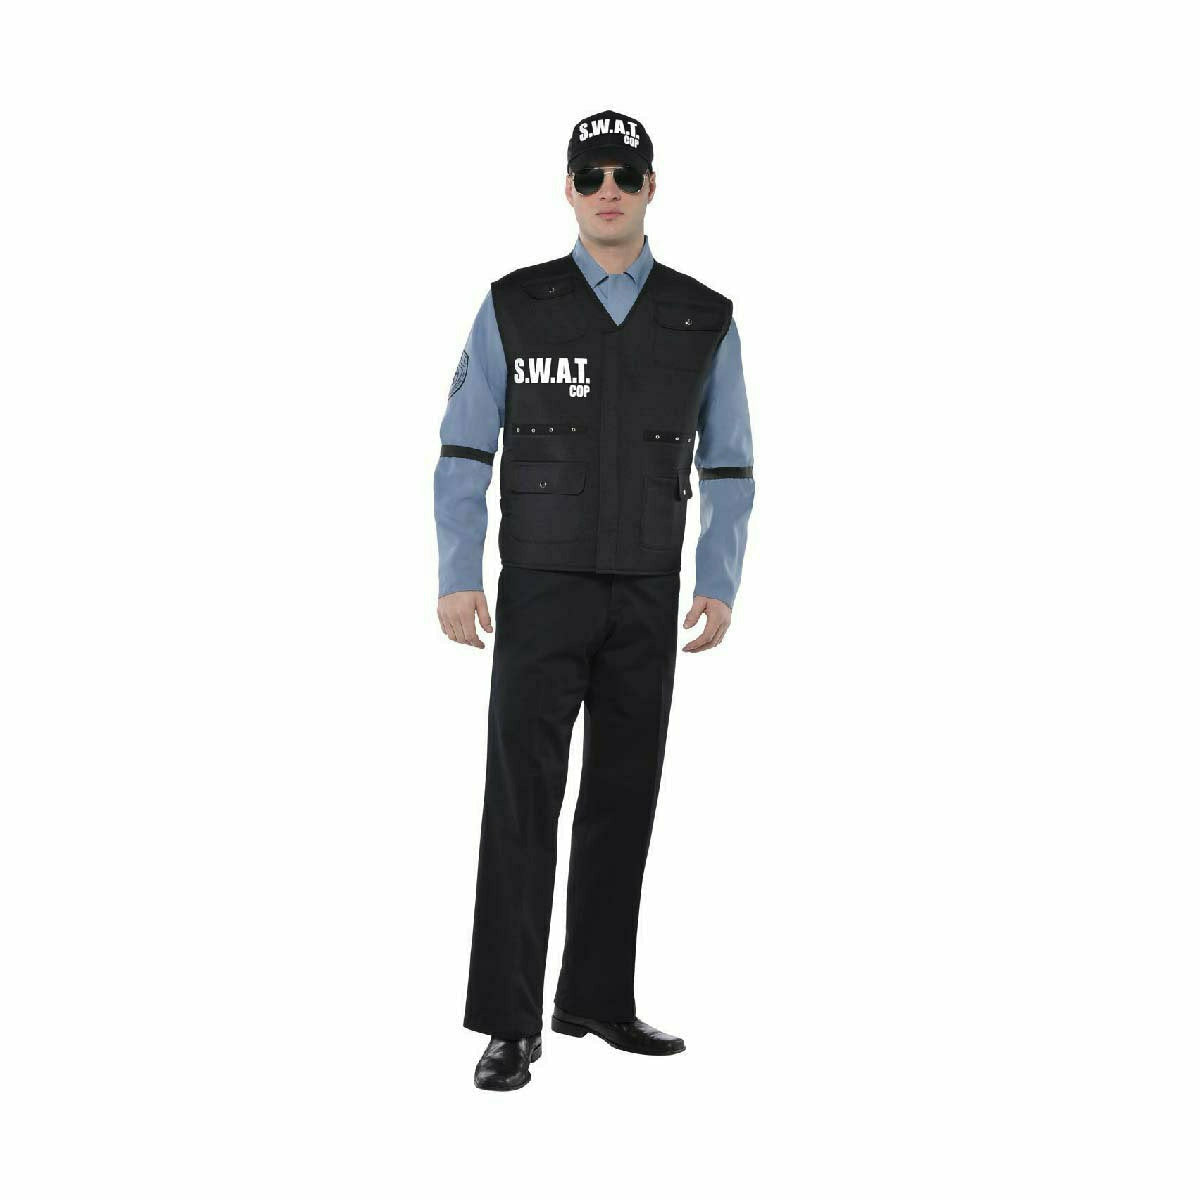 Ultimate Party Super Stores COSTUMES Plus Size 48-52 Mens Swat Cop Costume